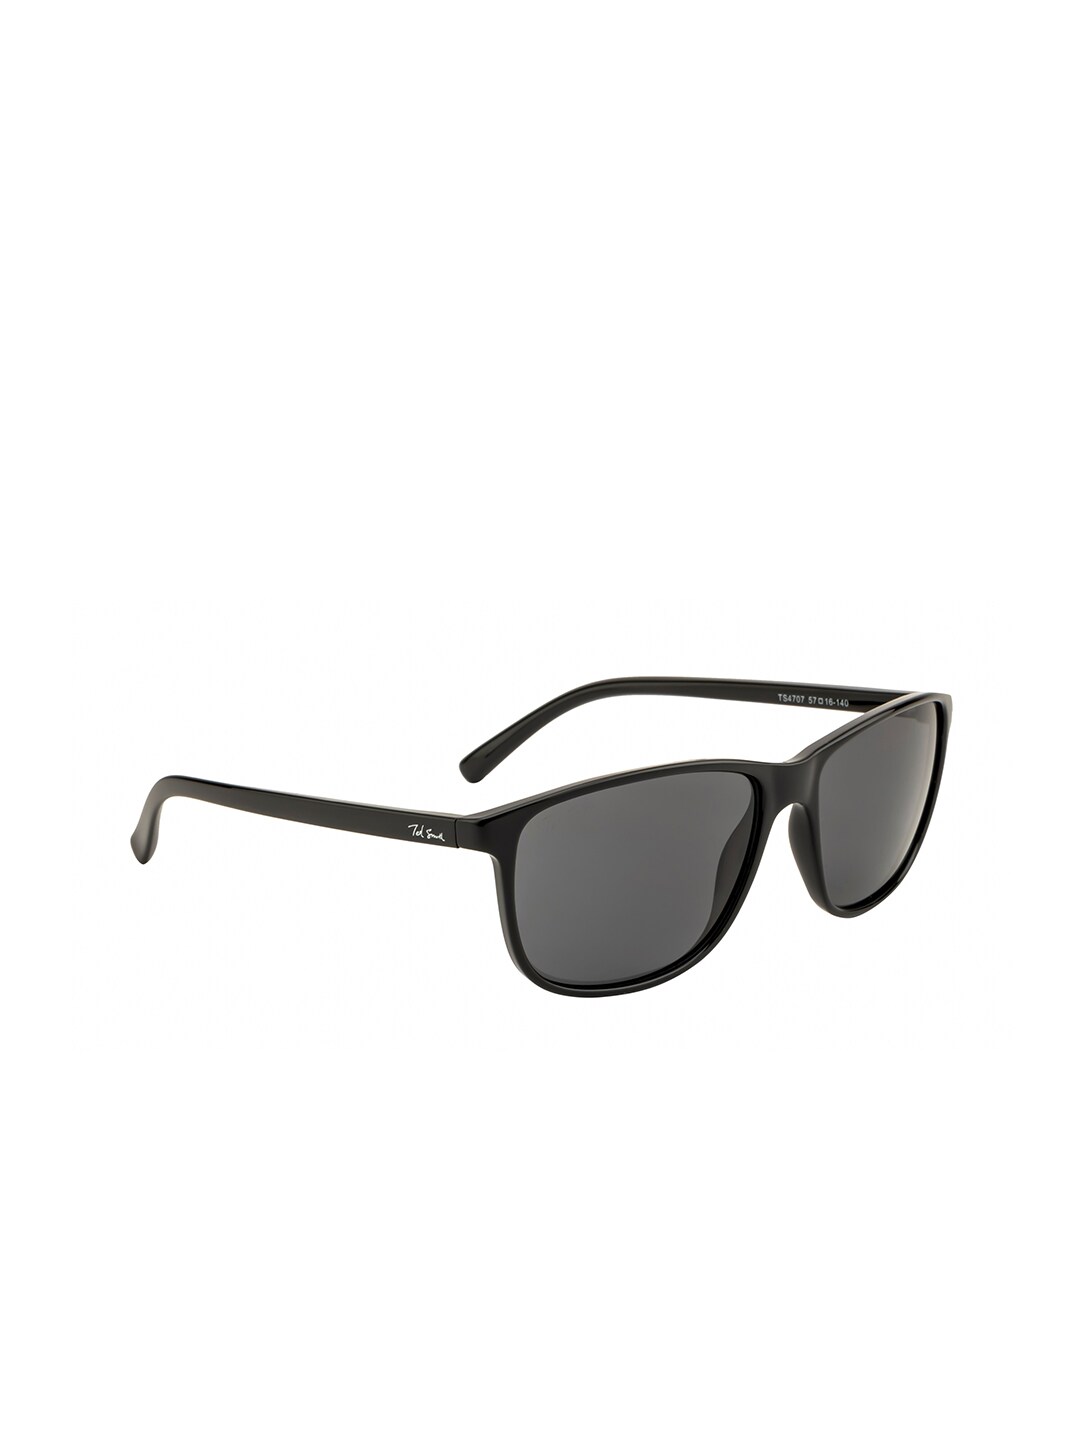 Ted Smith Unisex Grey Lens & Black Wayfarer Sunglasses with UV Protected Lens